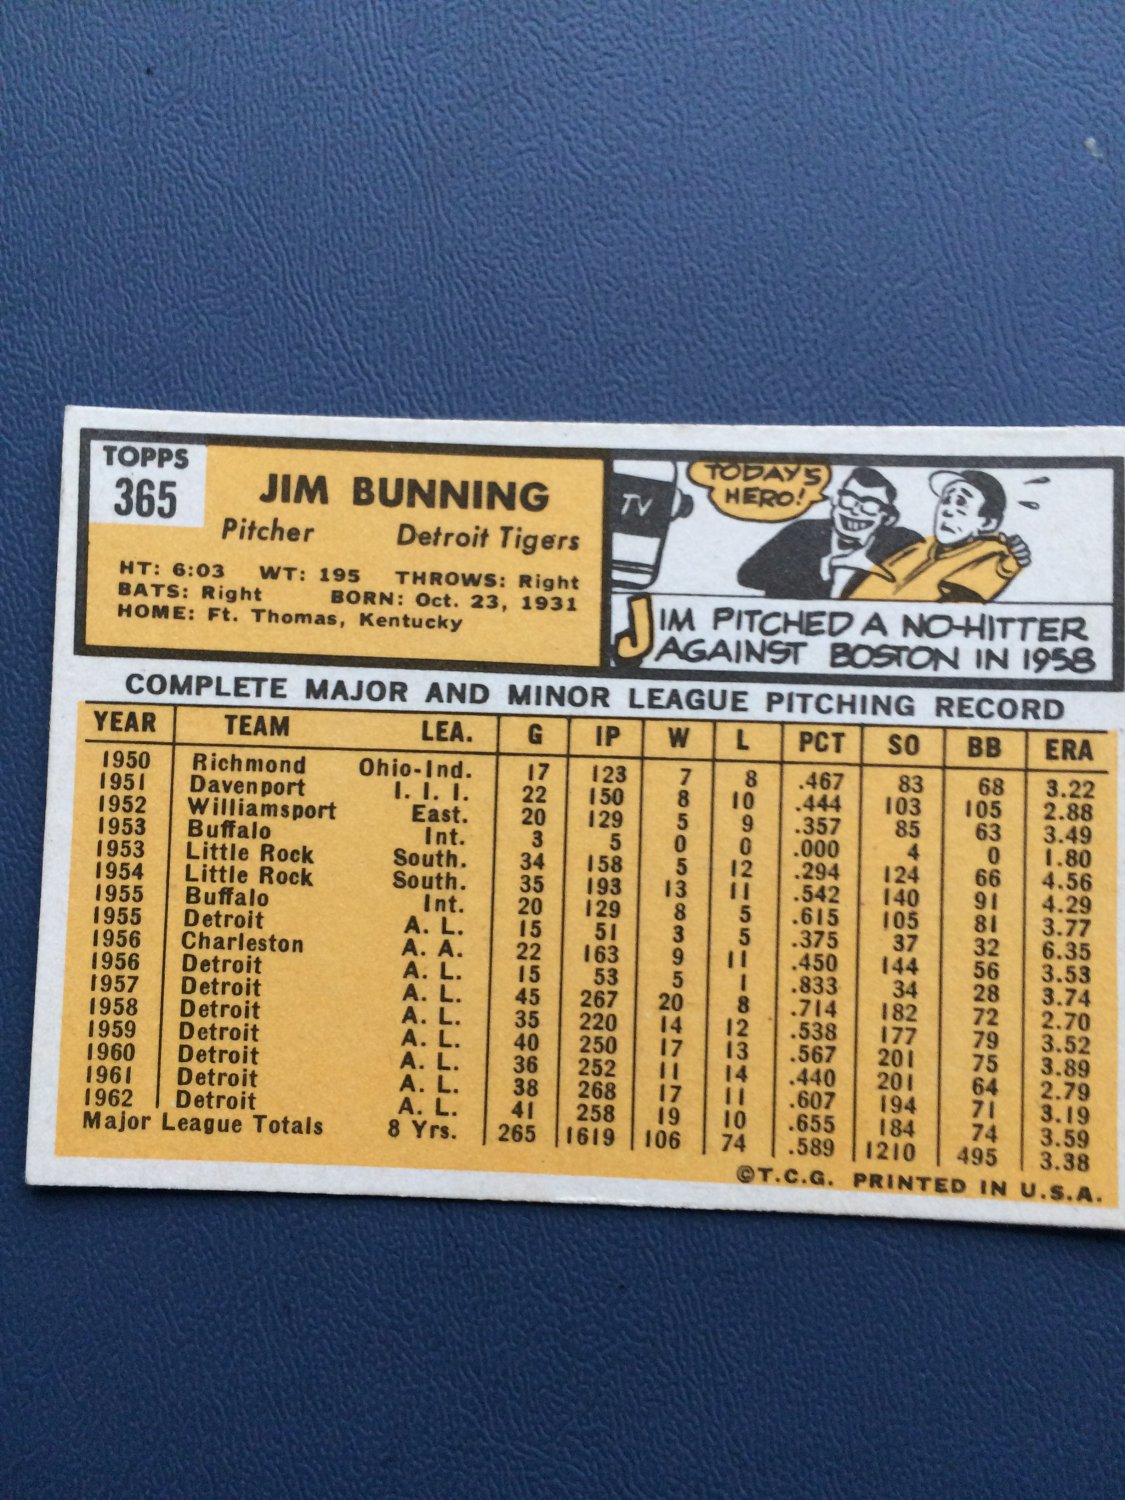 1963 Topps Baseball Card #365 Jim Bunning 